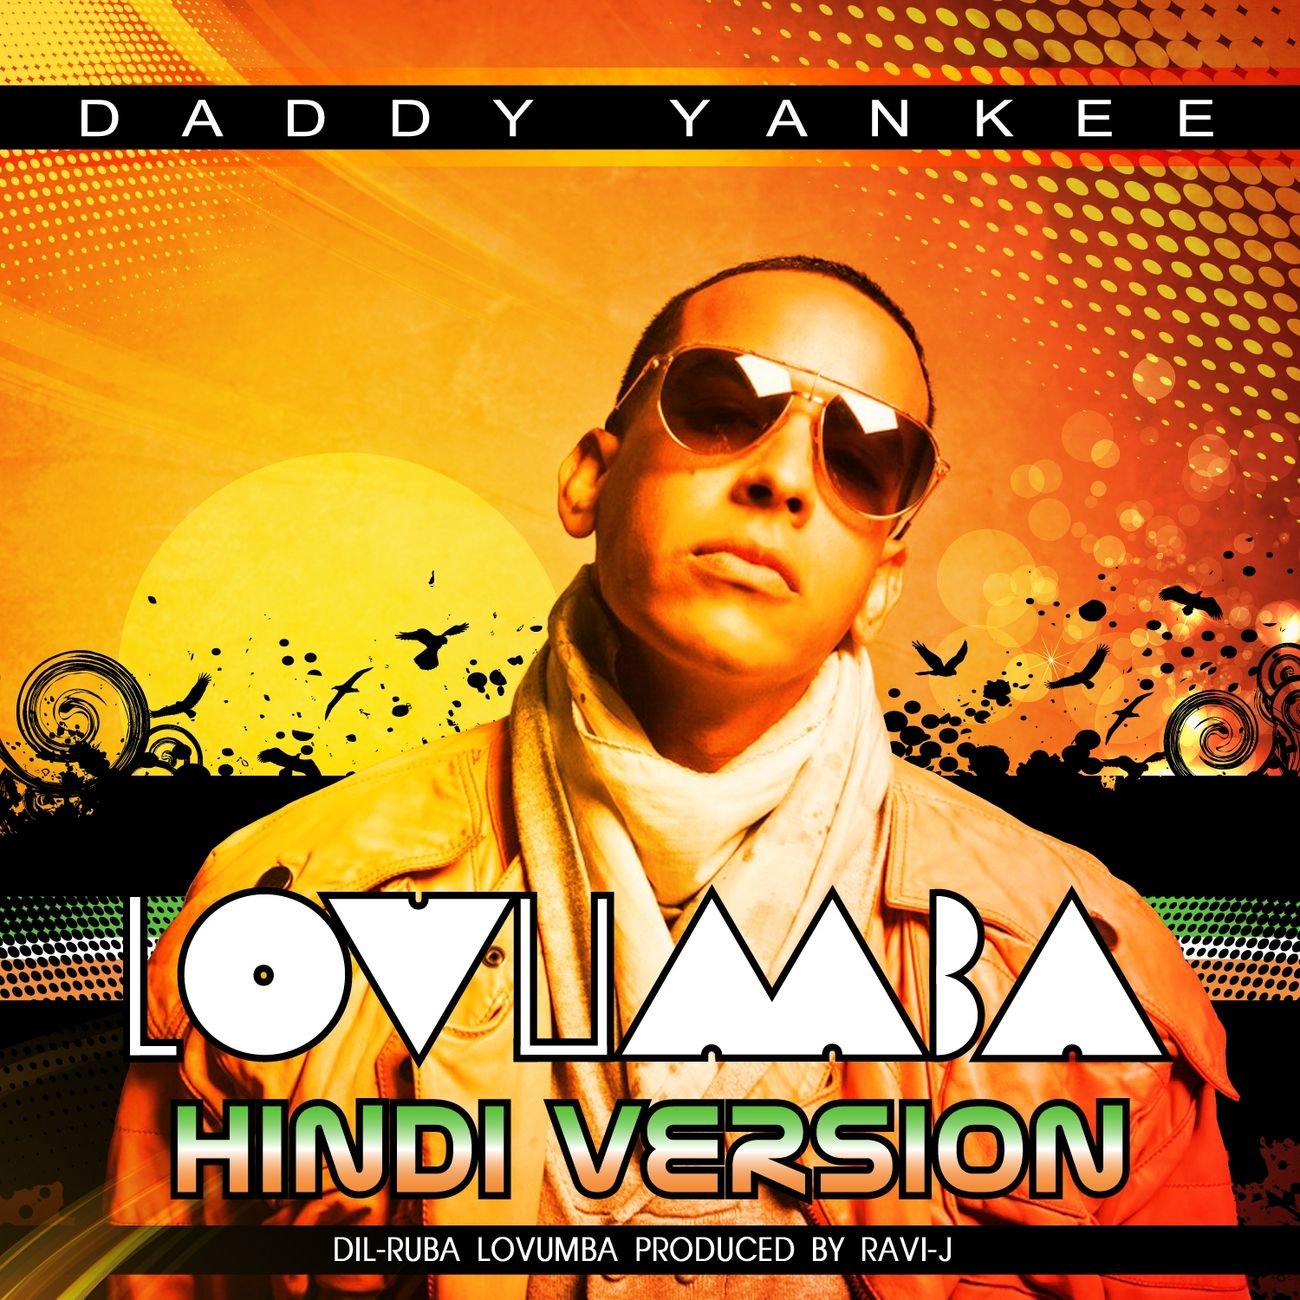 Daddy yankee gasoline. Daddy Yankee. Daddy Yankee album. Daddy Yankee Lovumba. Песня Daddy Yankee.